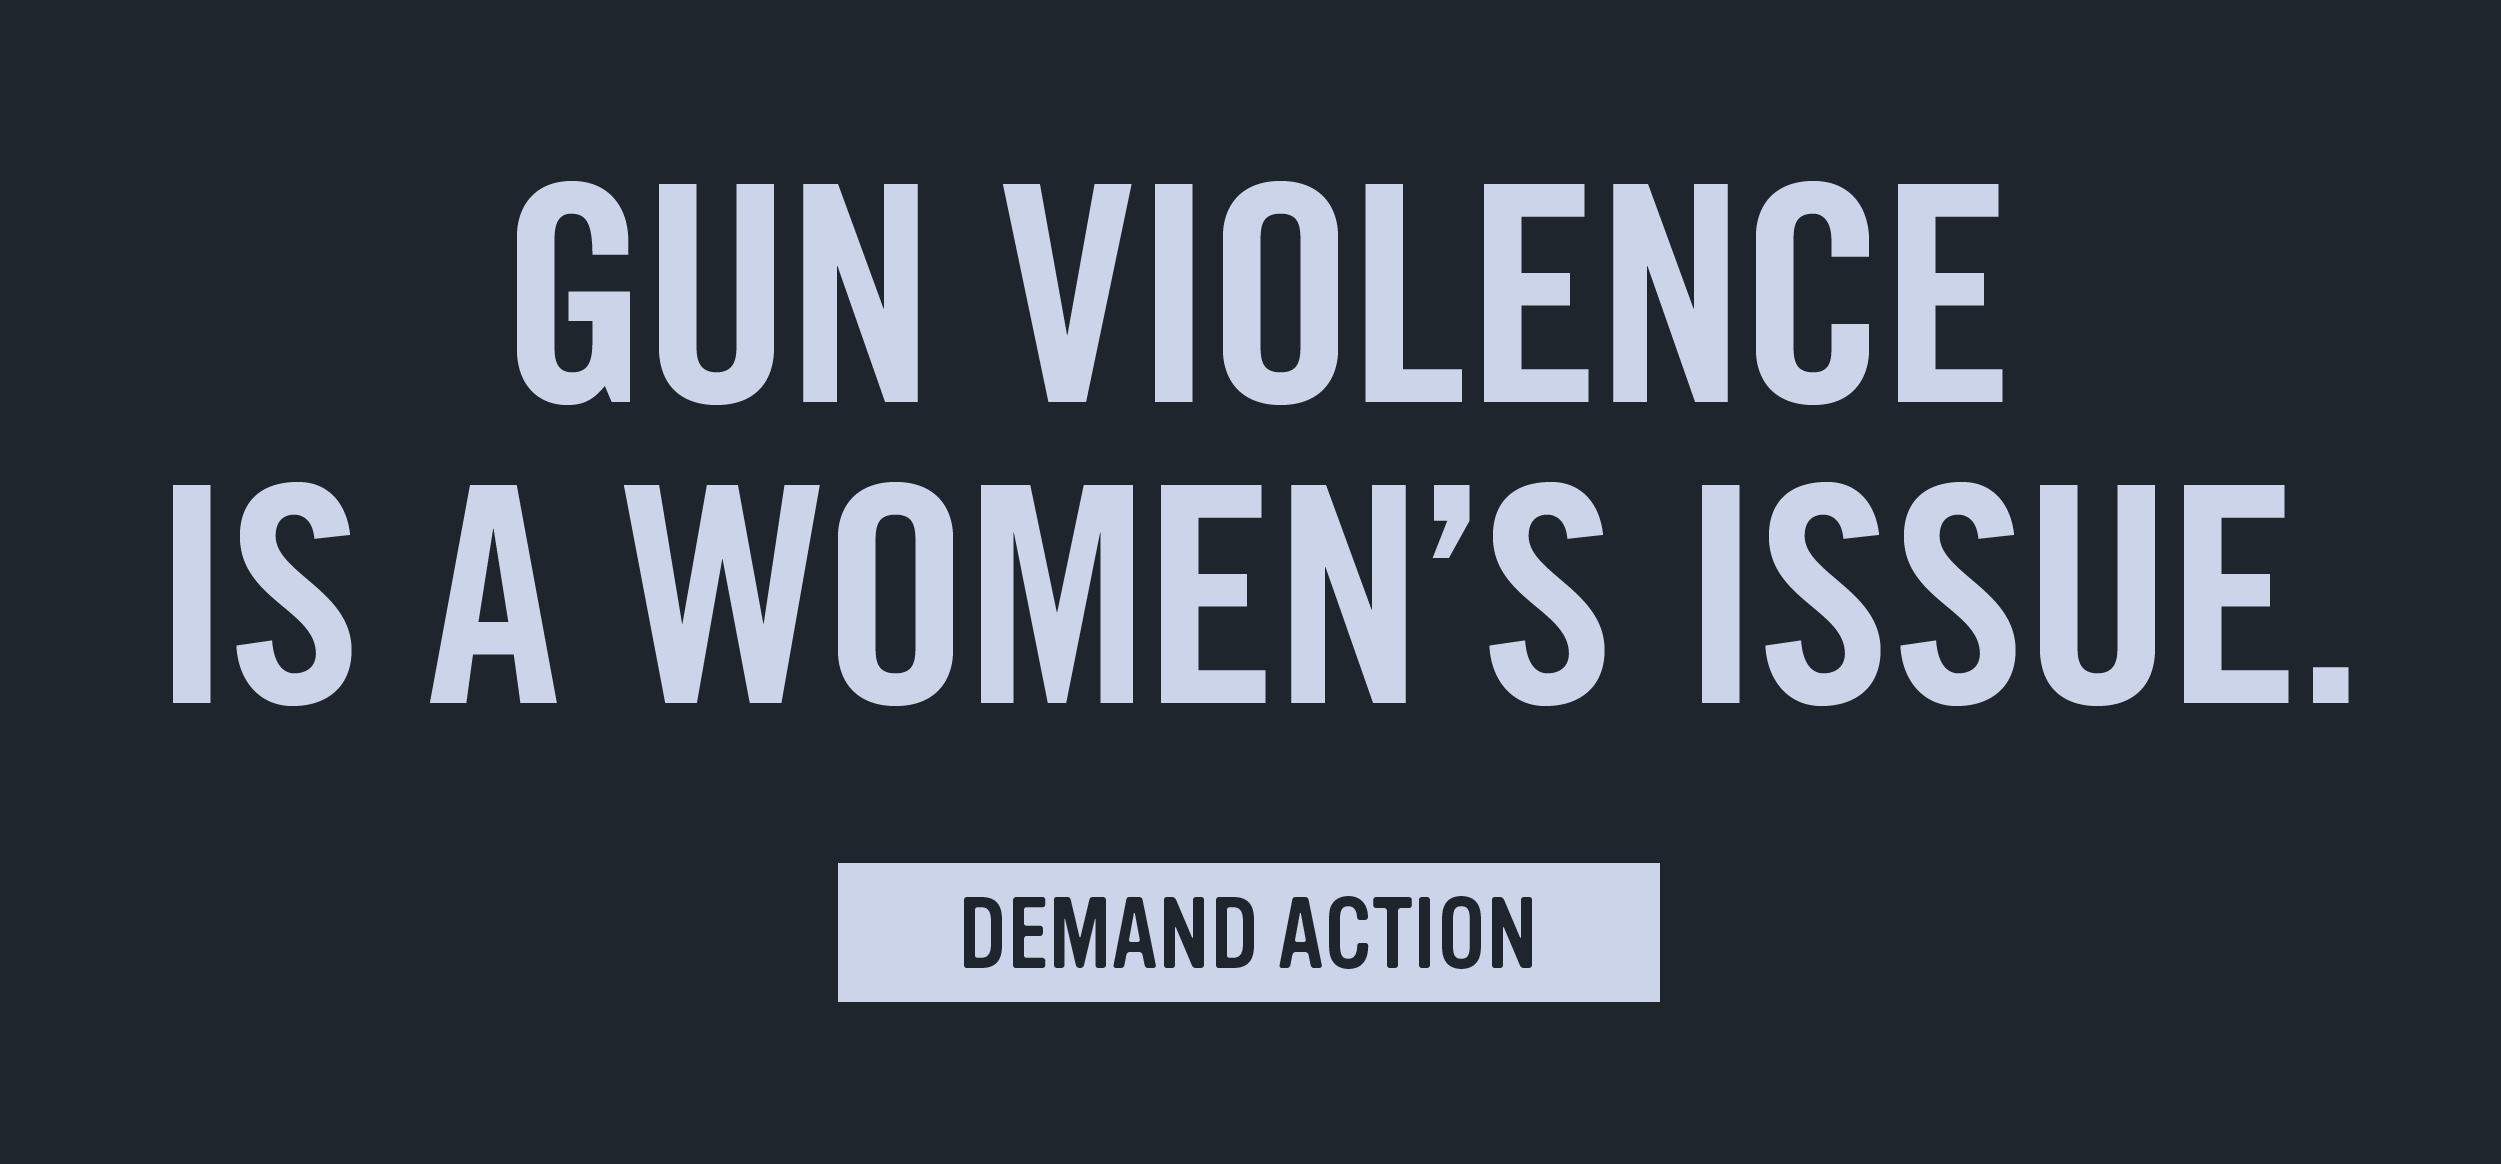 Gun Violence Is A Women's Issue: Demand Action